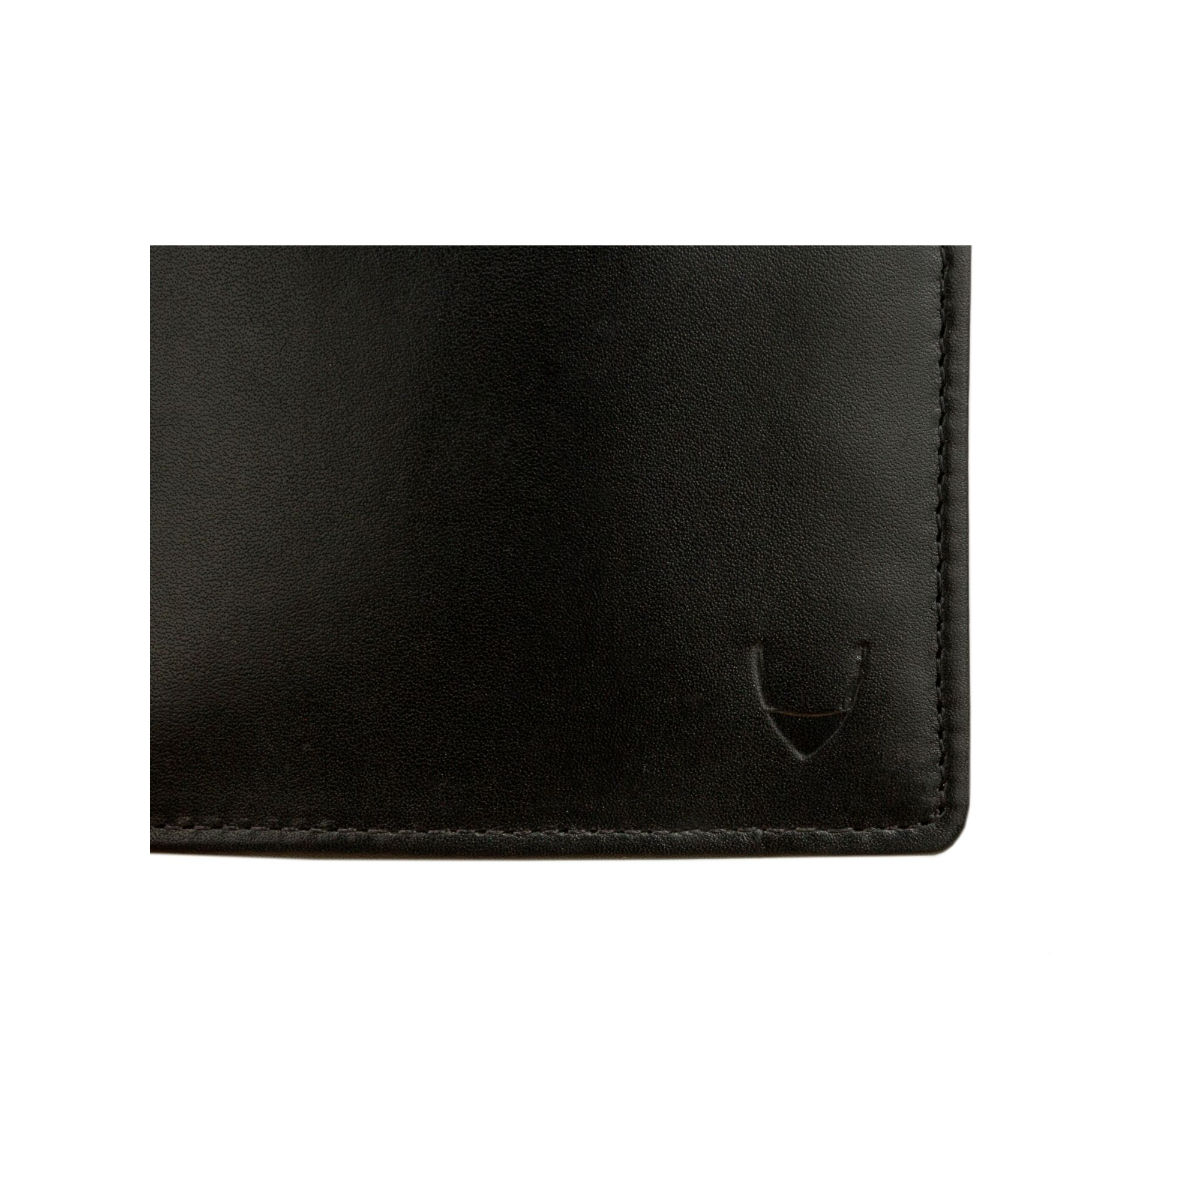 Hidesign Black L103 N RF Ranch Wallets